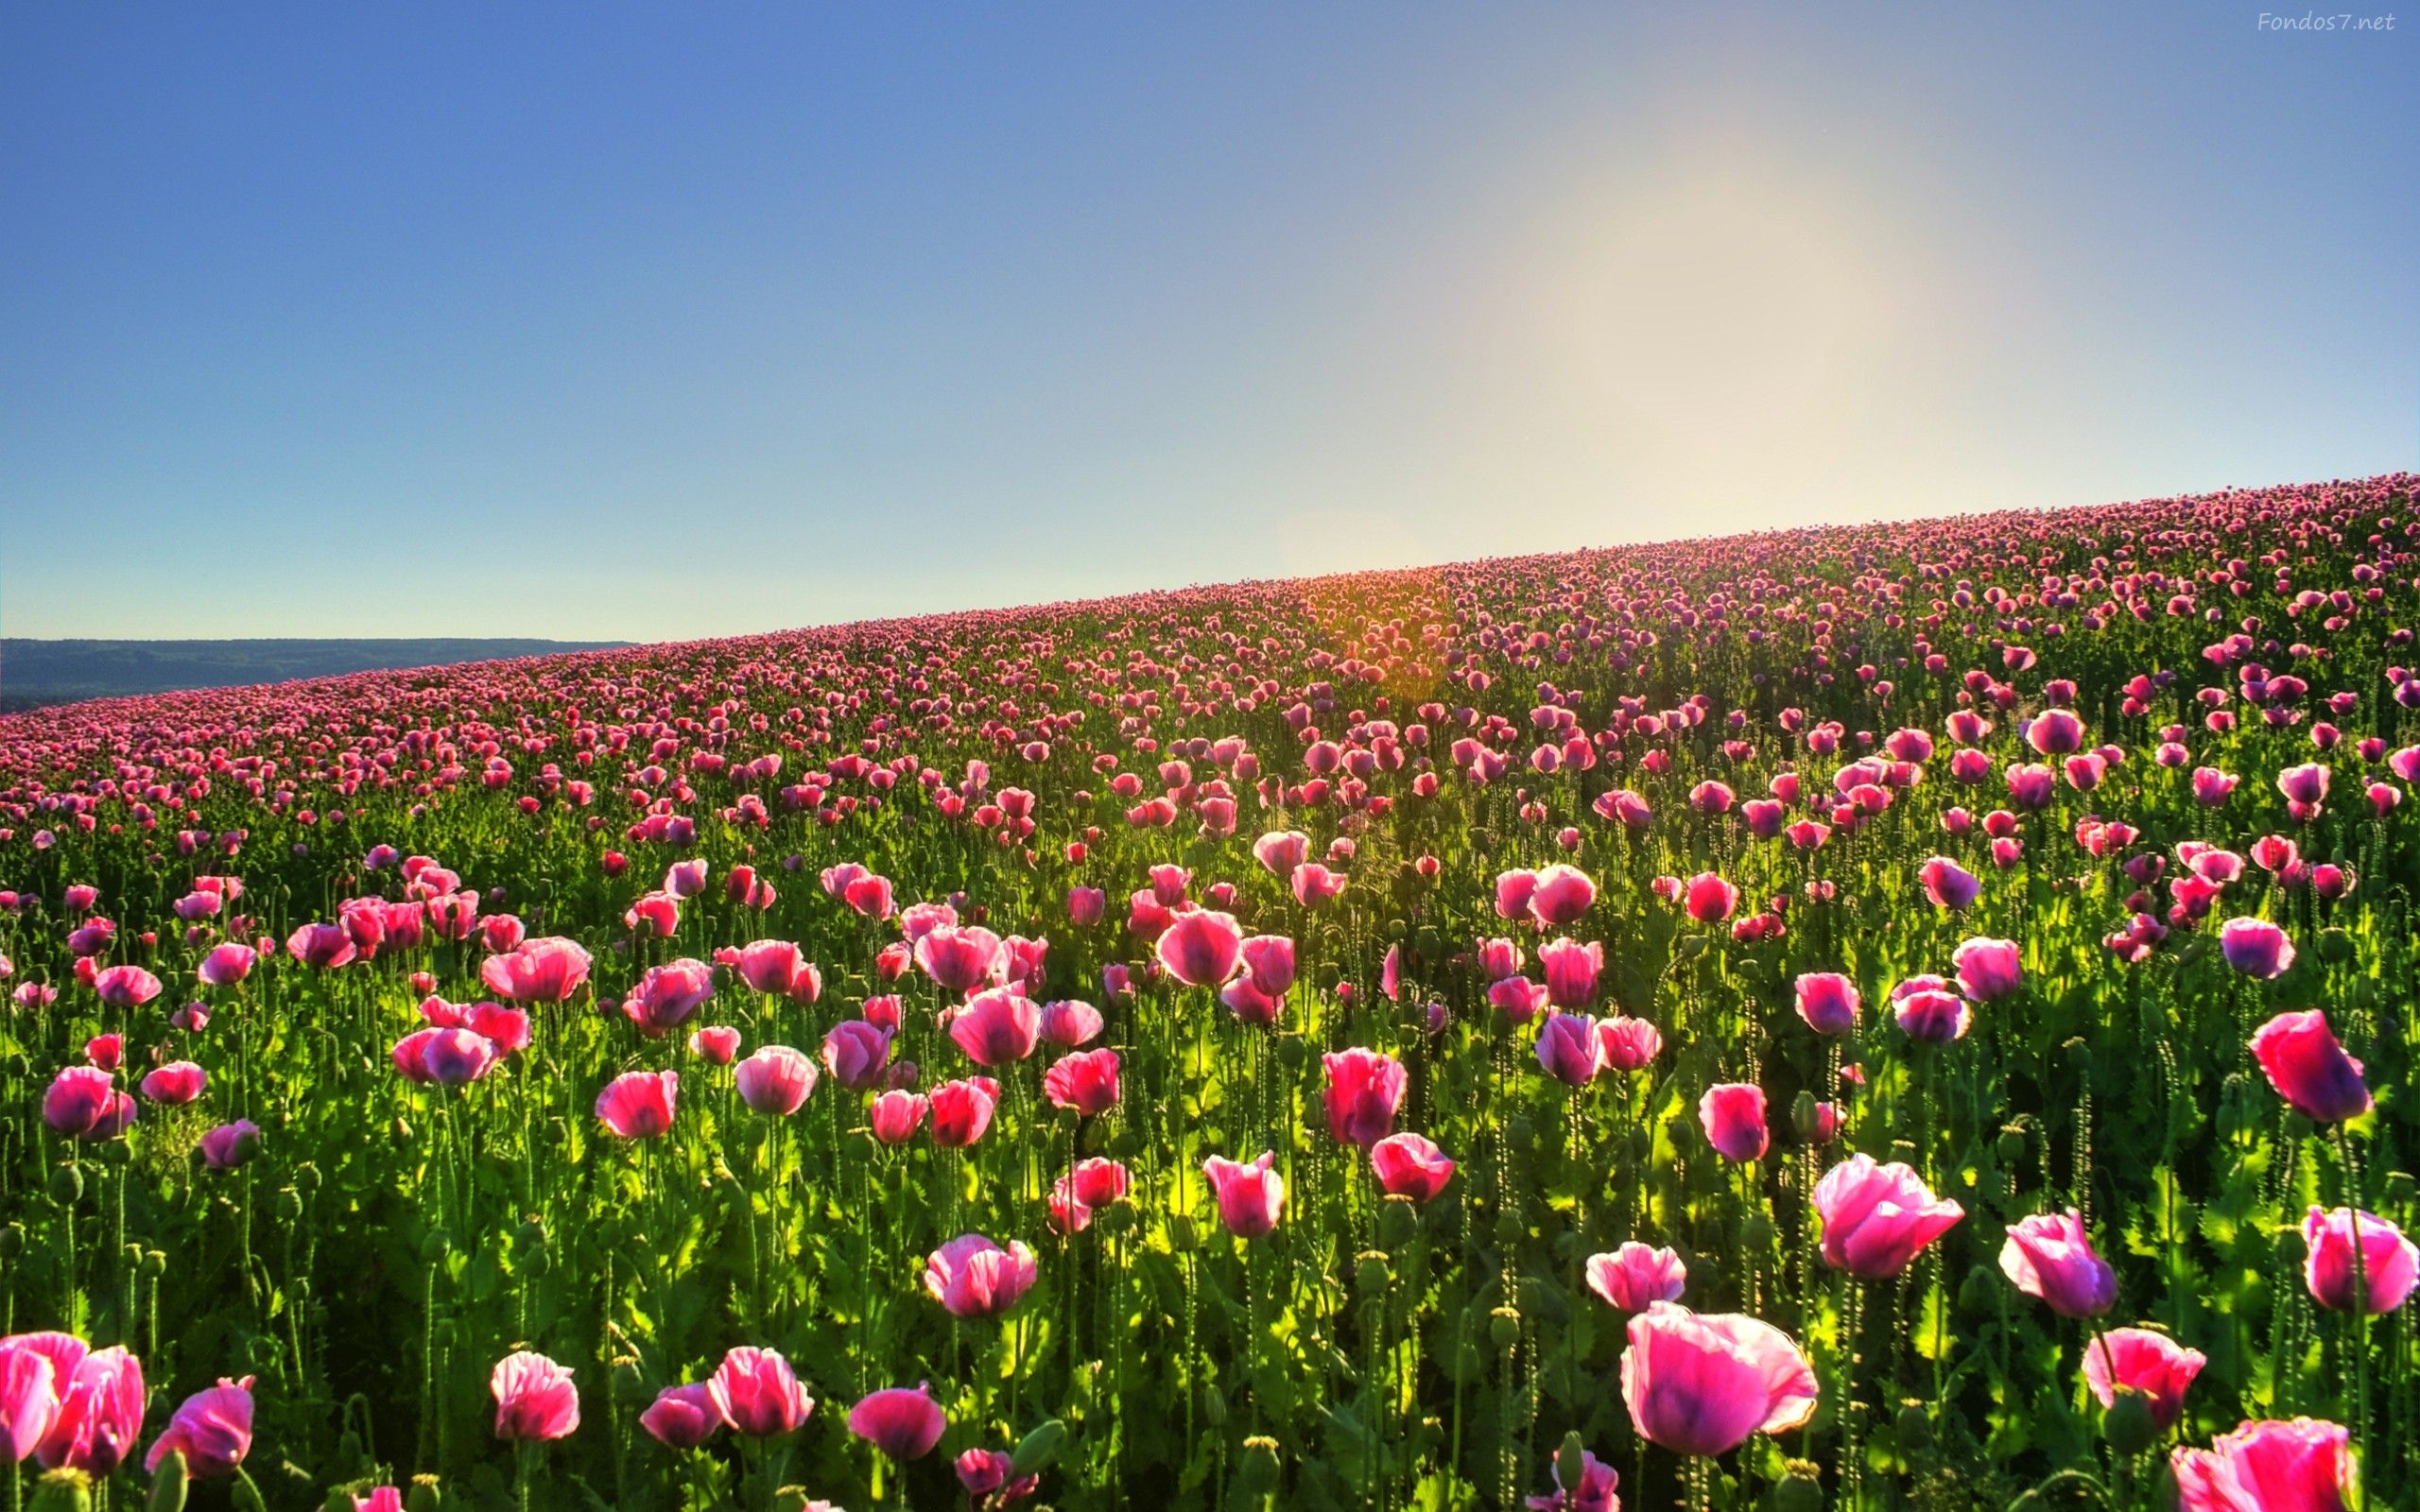 flores rosadas - Buscar con Google | FLORES | Pinterest | Beautiful ...